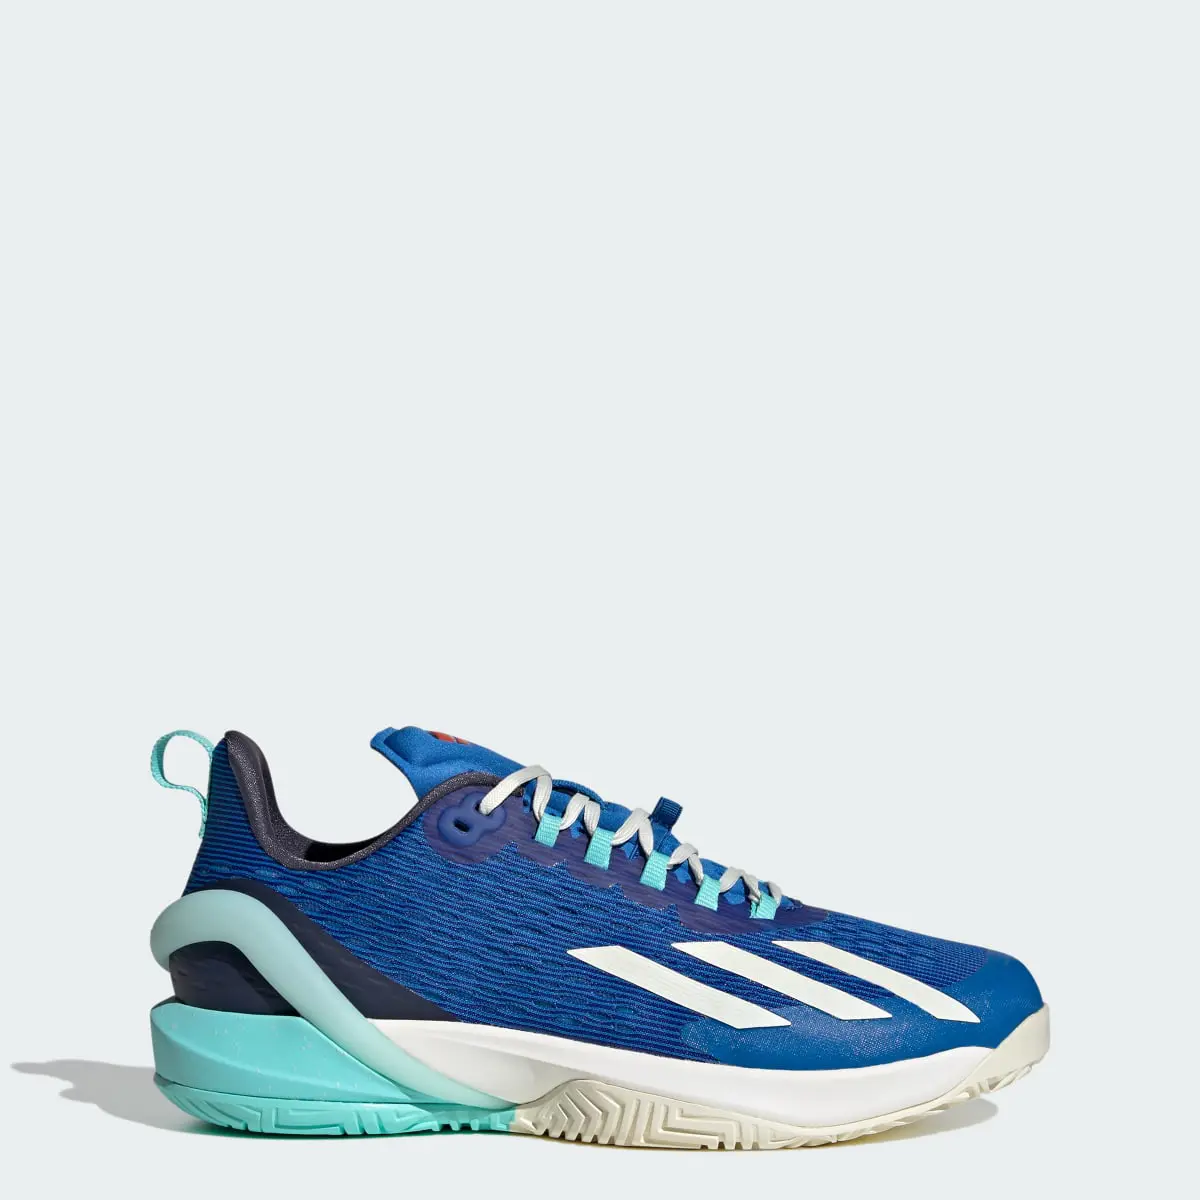 Adidas adizero Cybersonic Tenis Ayakkabısı. 1